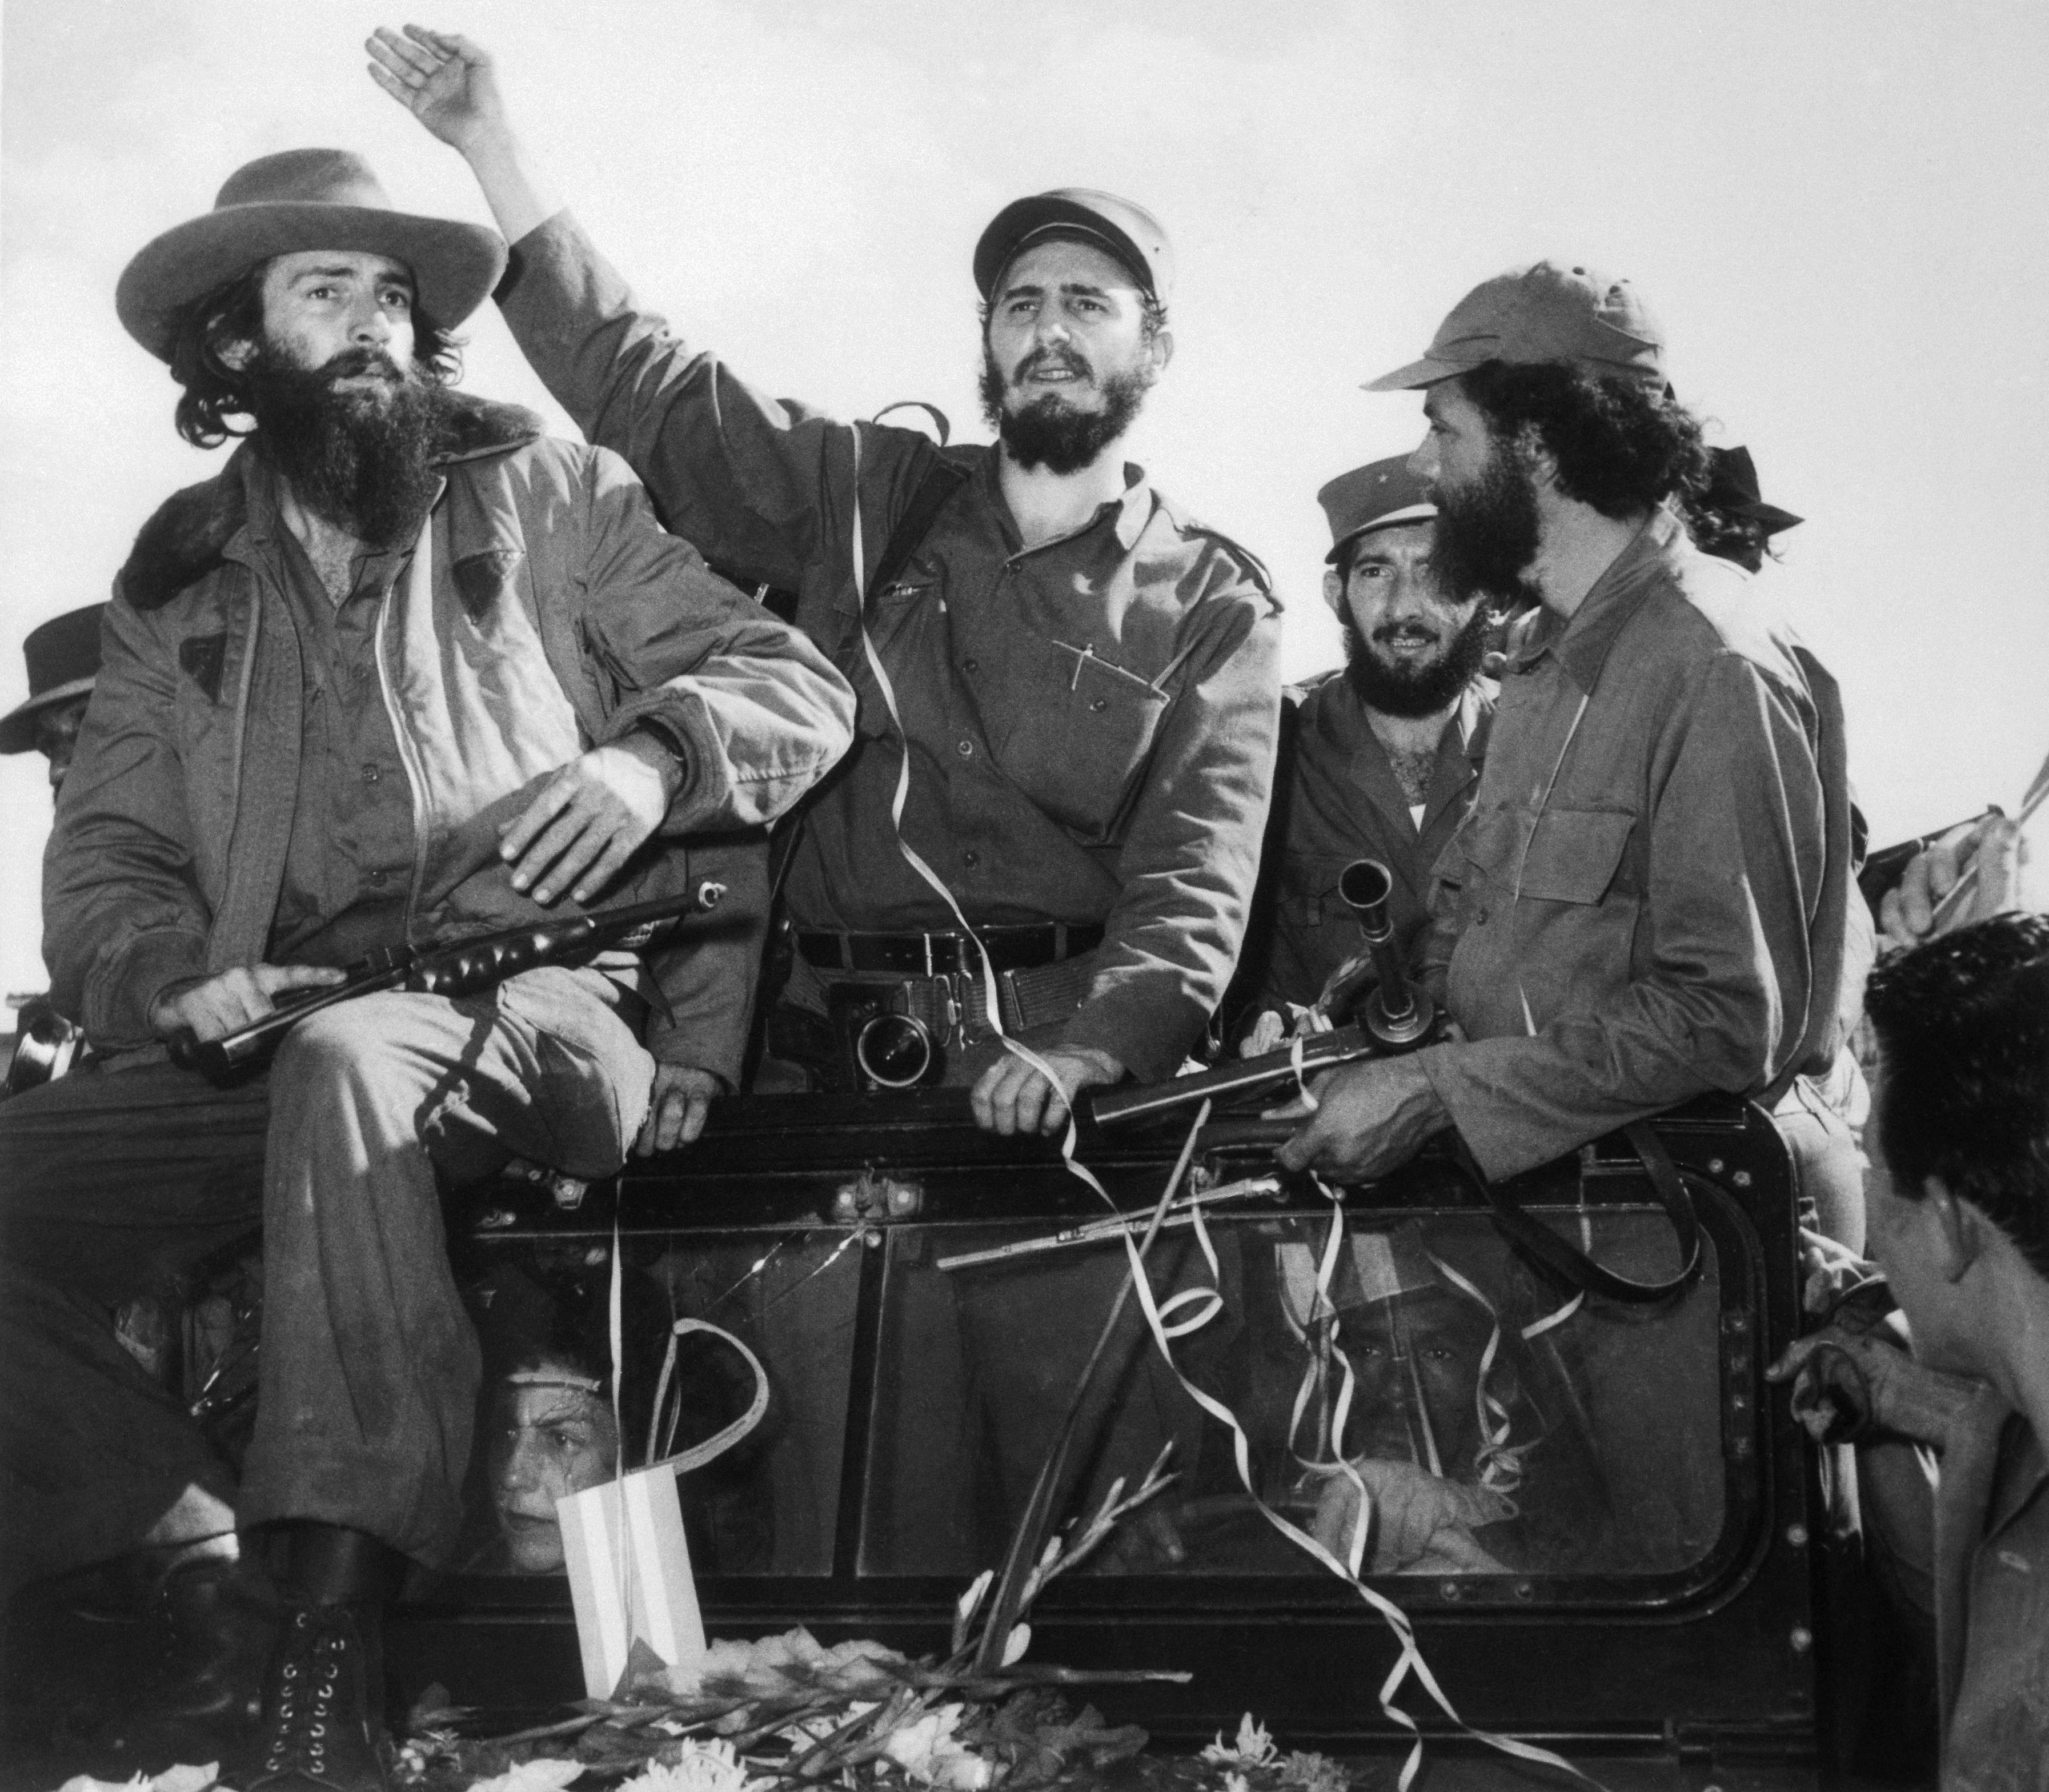 People 3587x3137 Fidel Castro Cuba history men beard vintage monochrome photography gun revolutionary communism political figure deceased